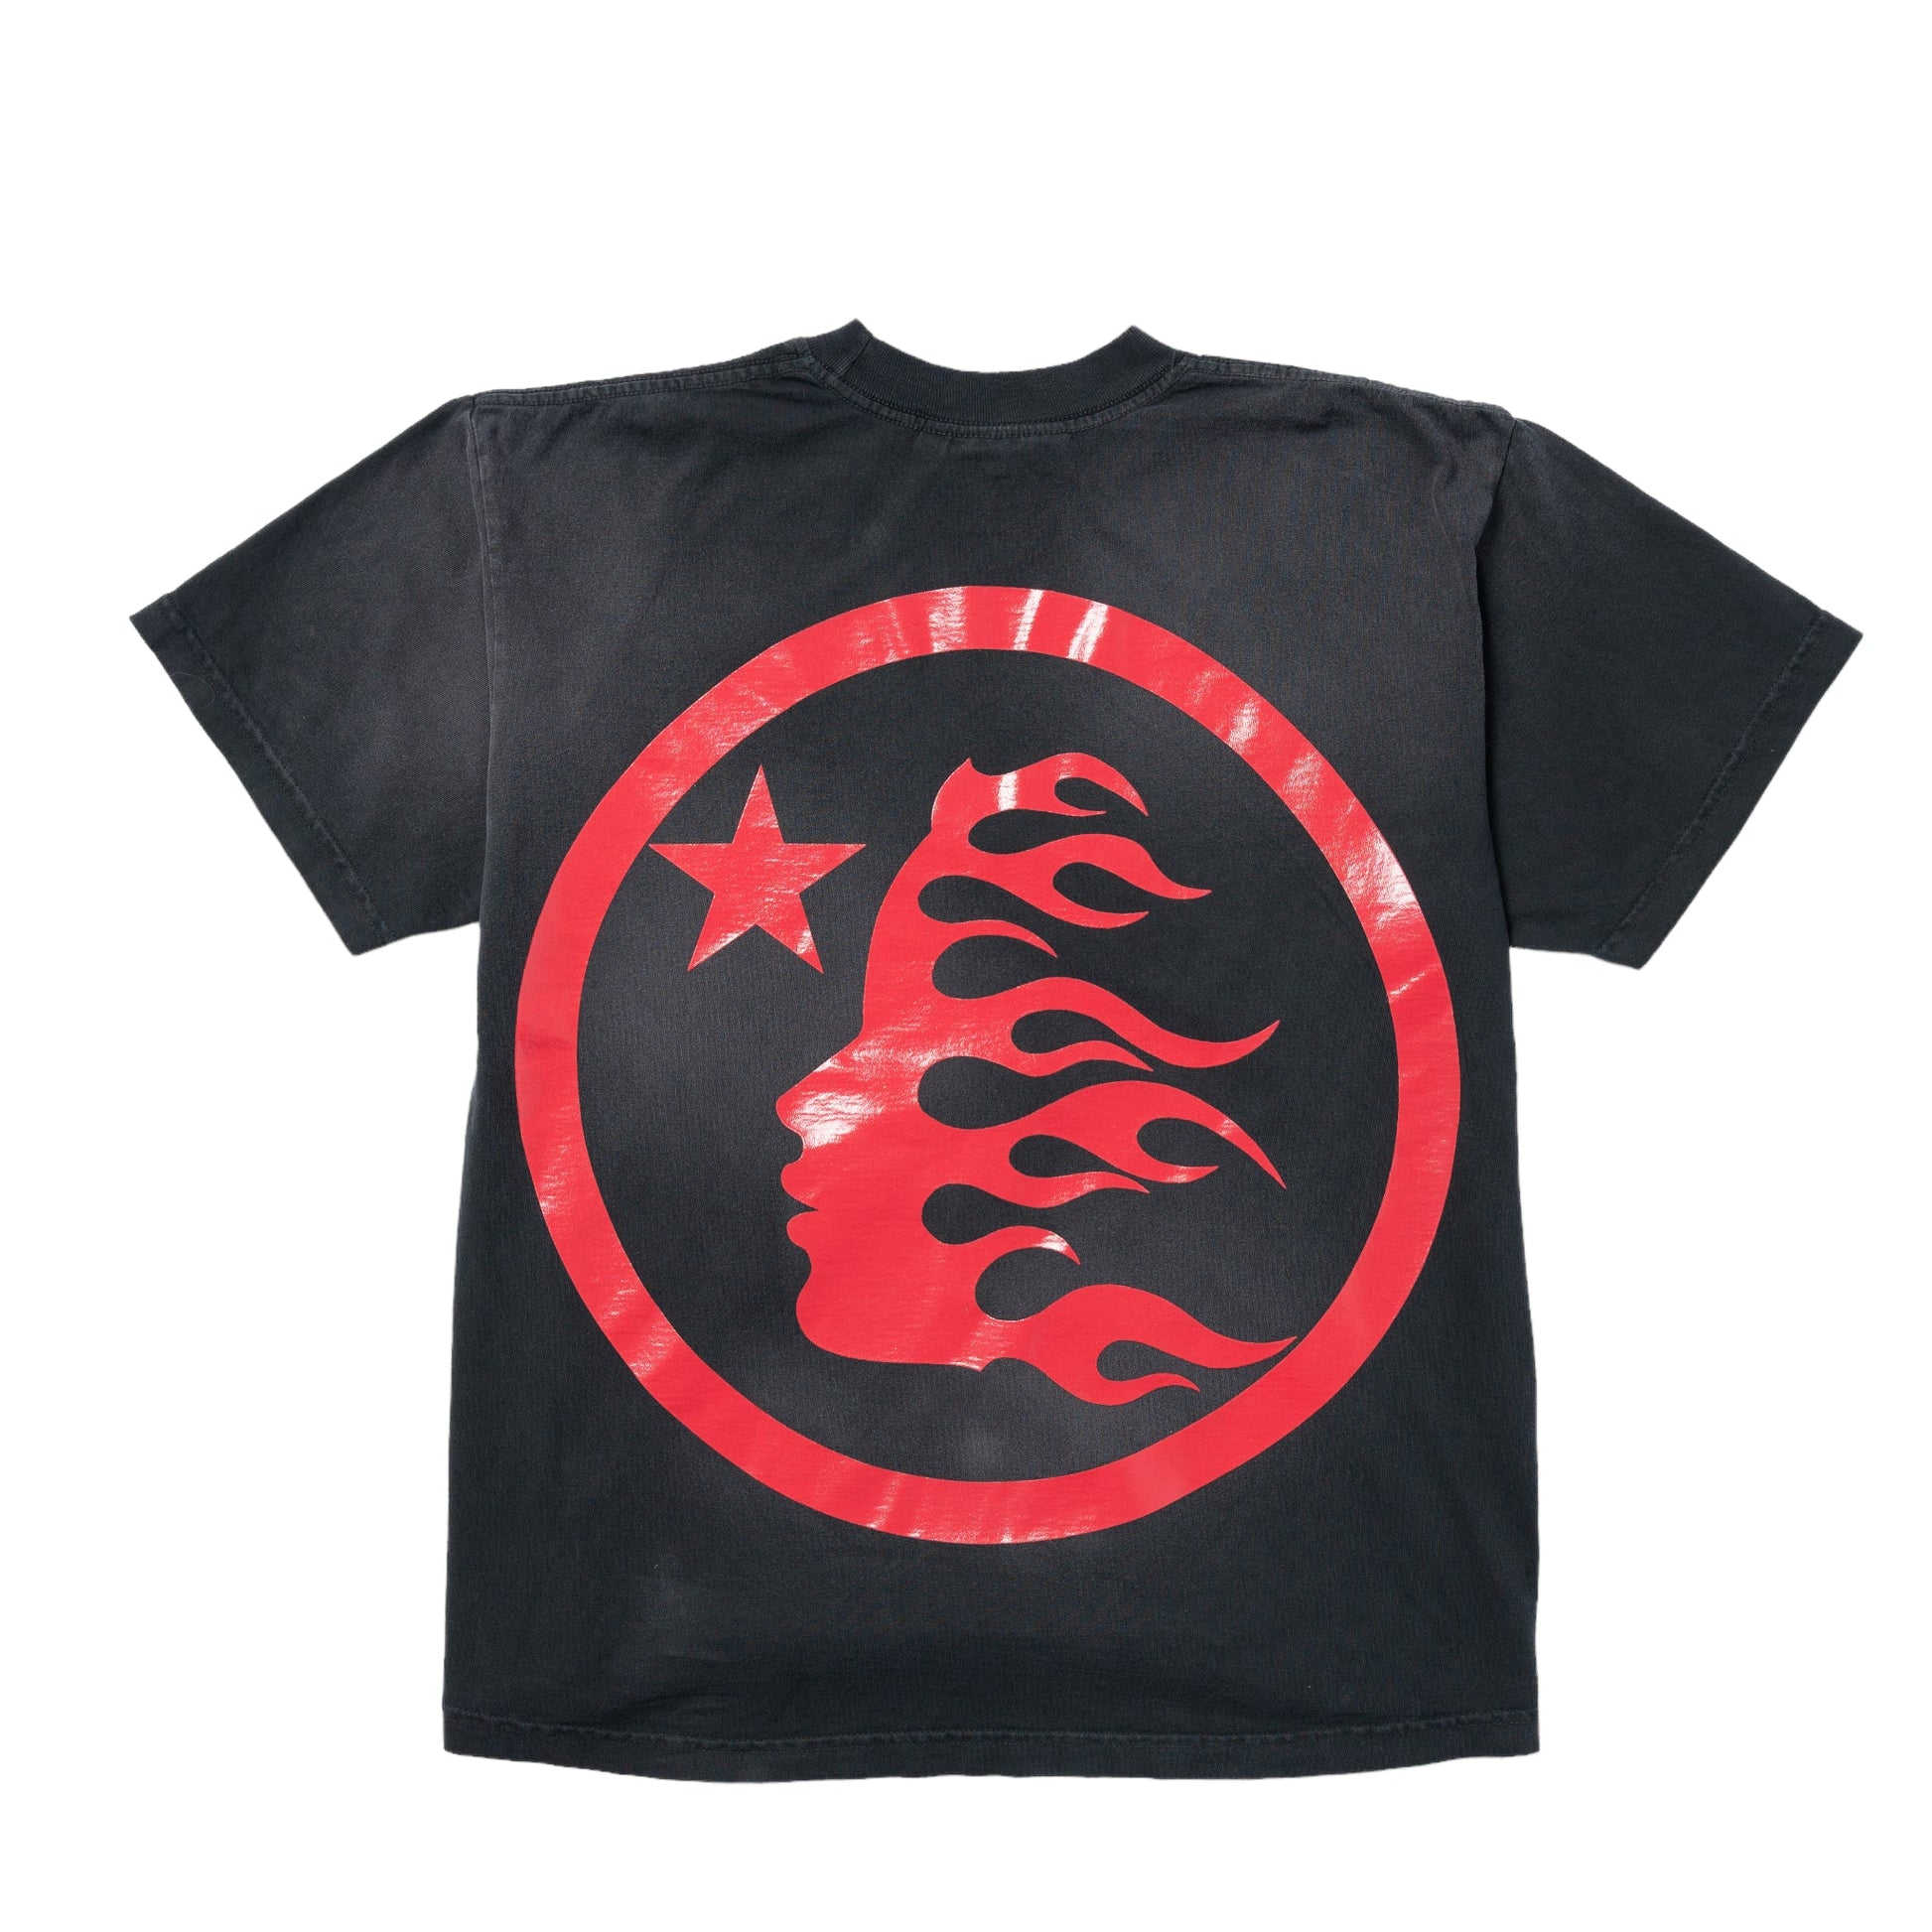 Hellstar Sport Logo Gel T-Shirt (Black) - Supra Sneakers